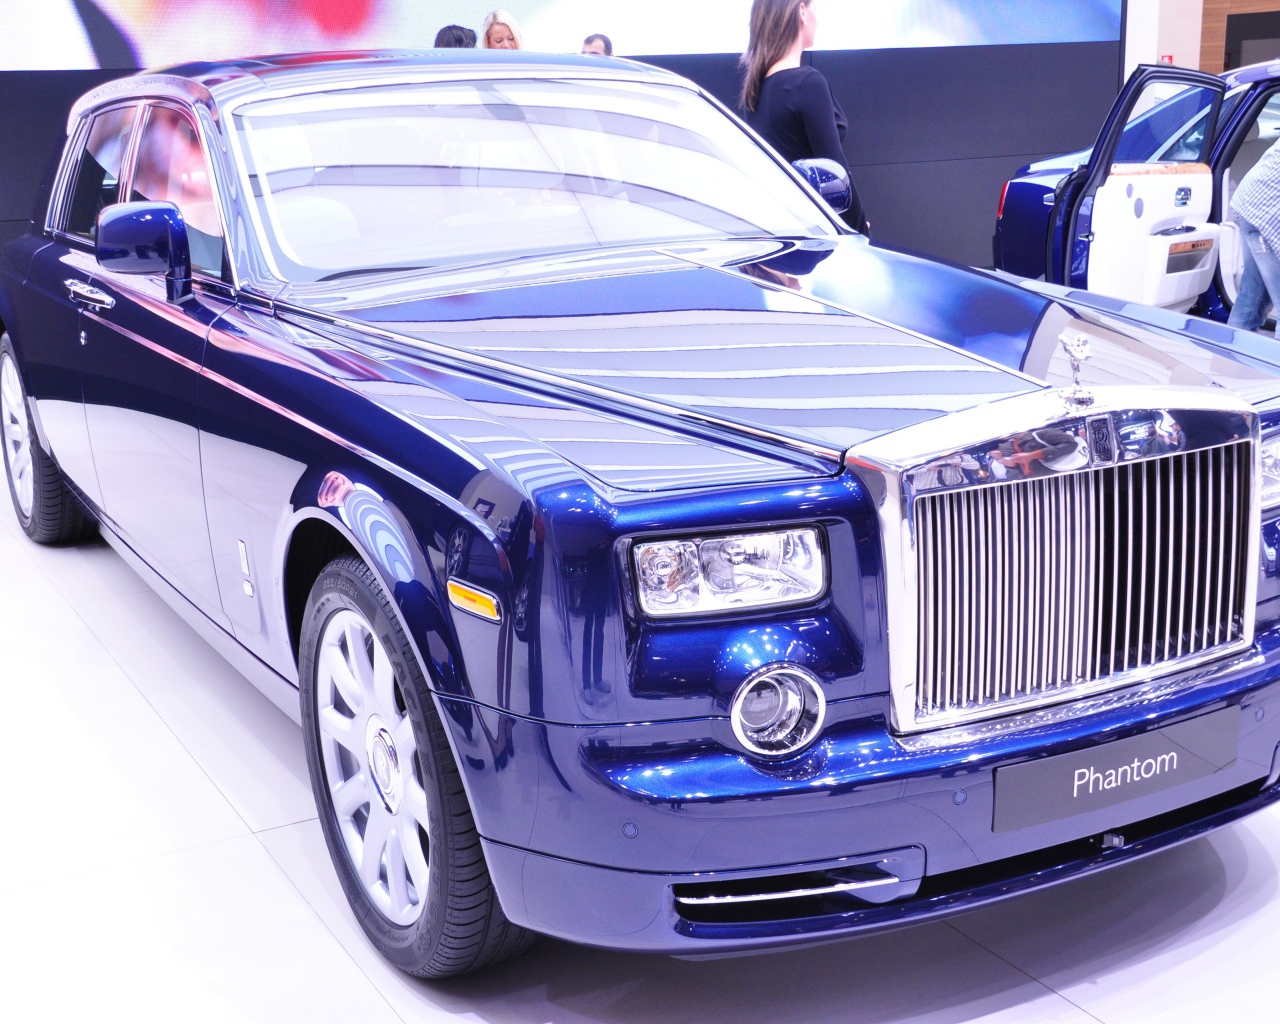 Blue Rolls-Royce on display